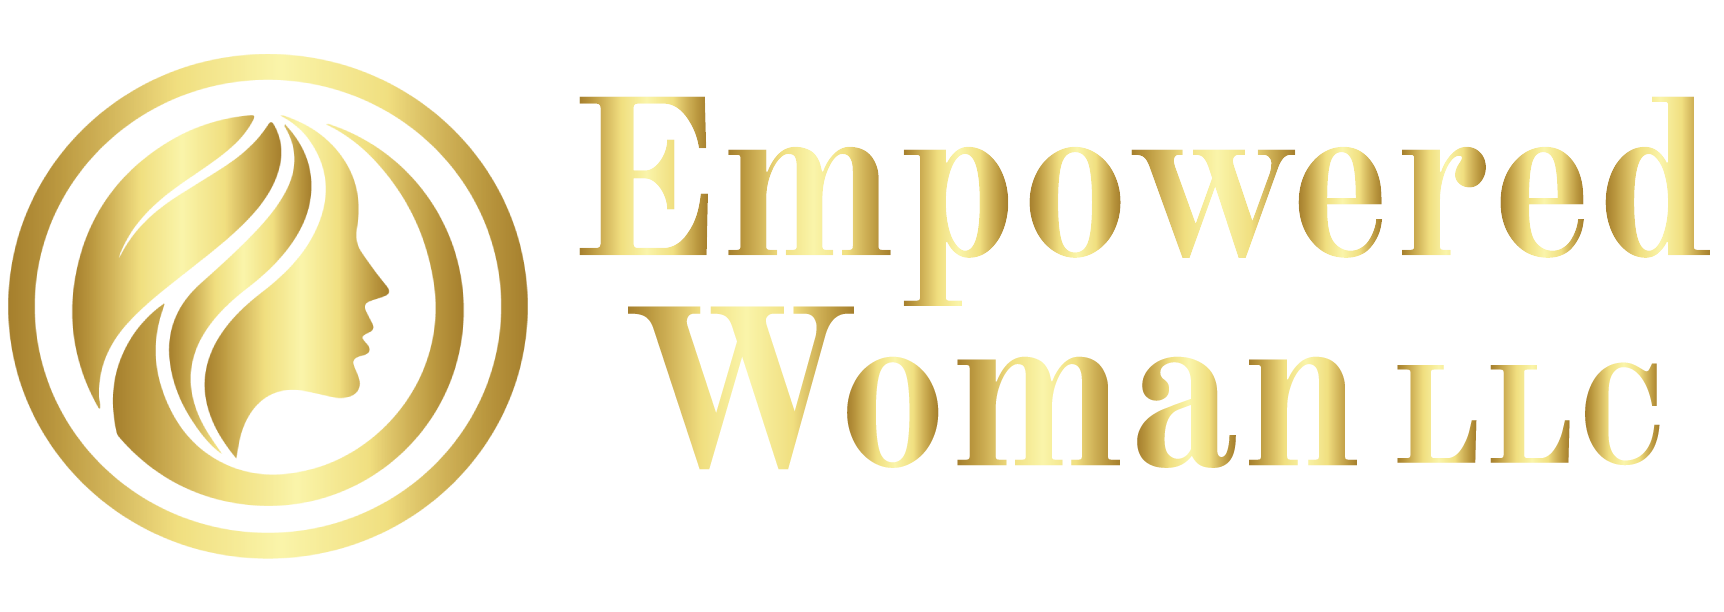 Empowered Woman LLC